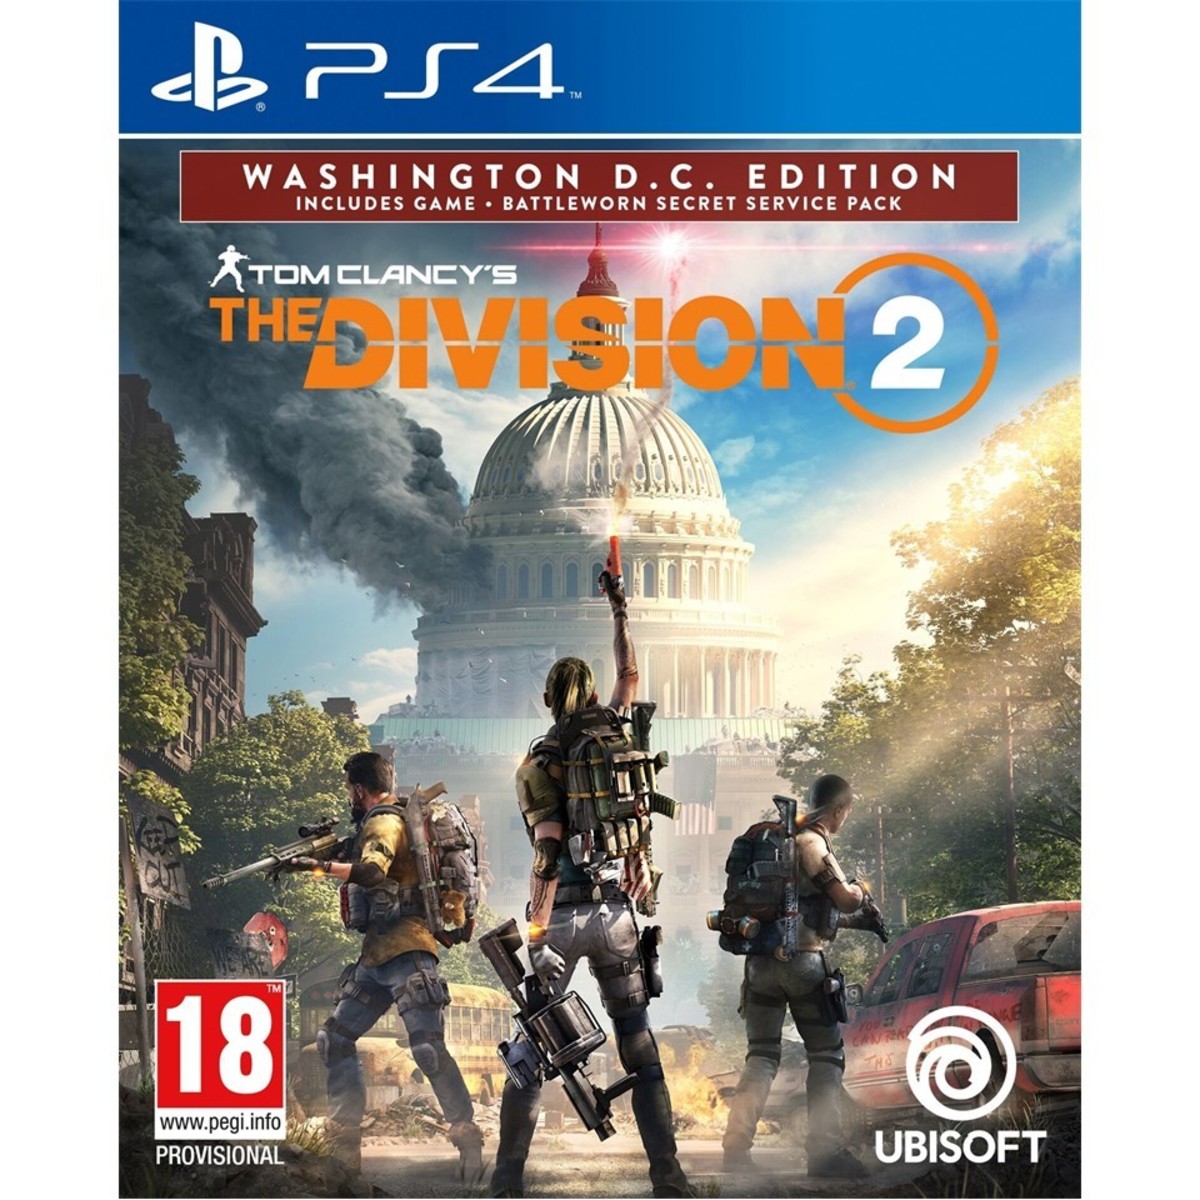 The Division 2 Washington D.C. Edition PS4